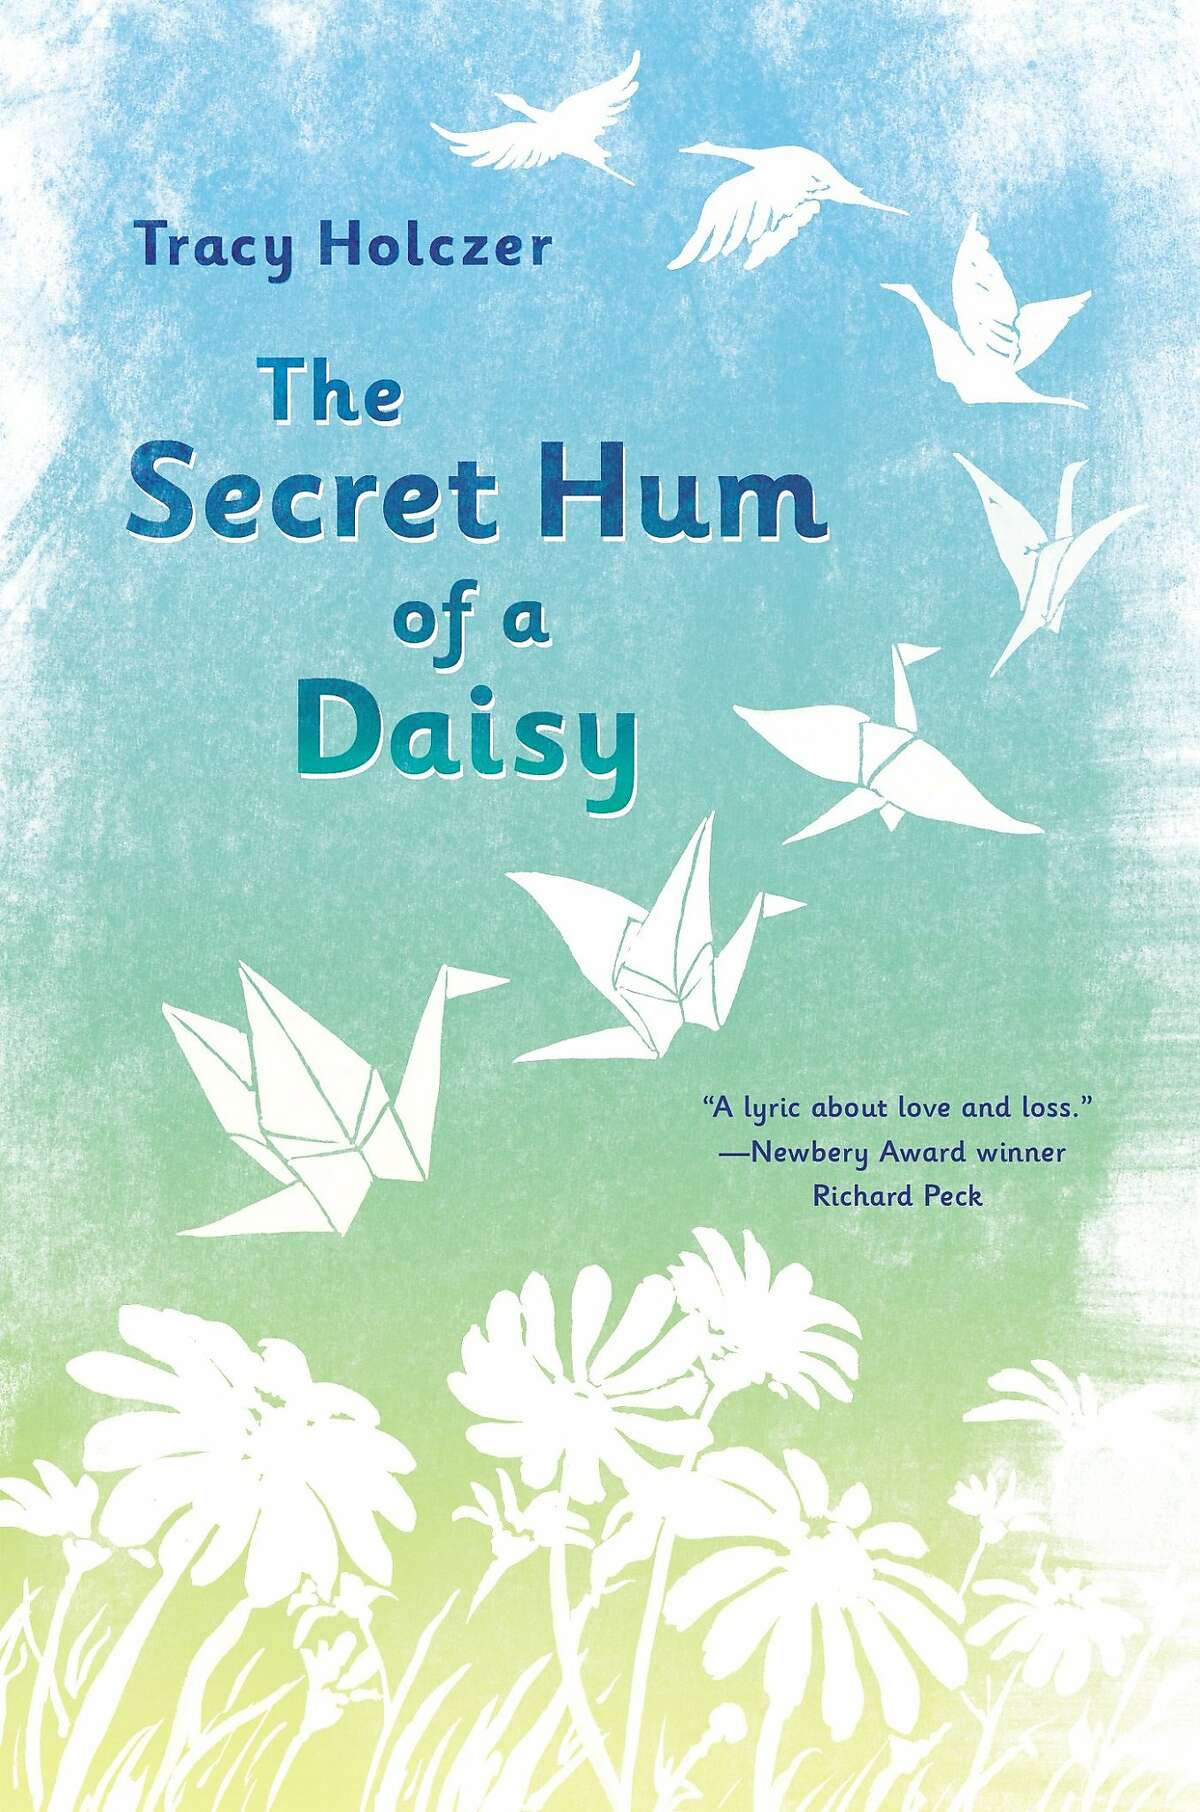 Cover for "Secret Hum of a Daisy"